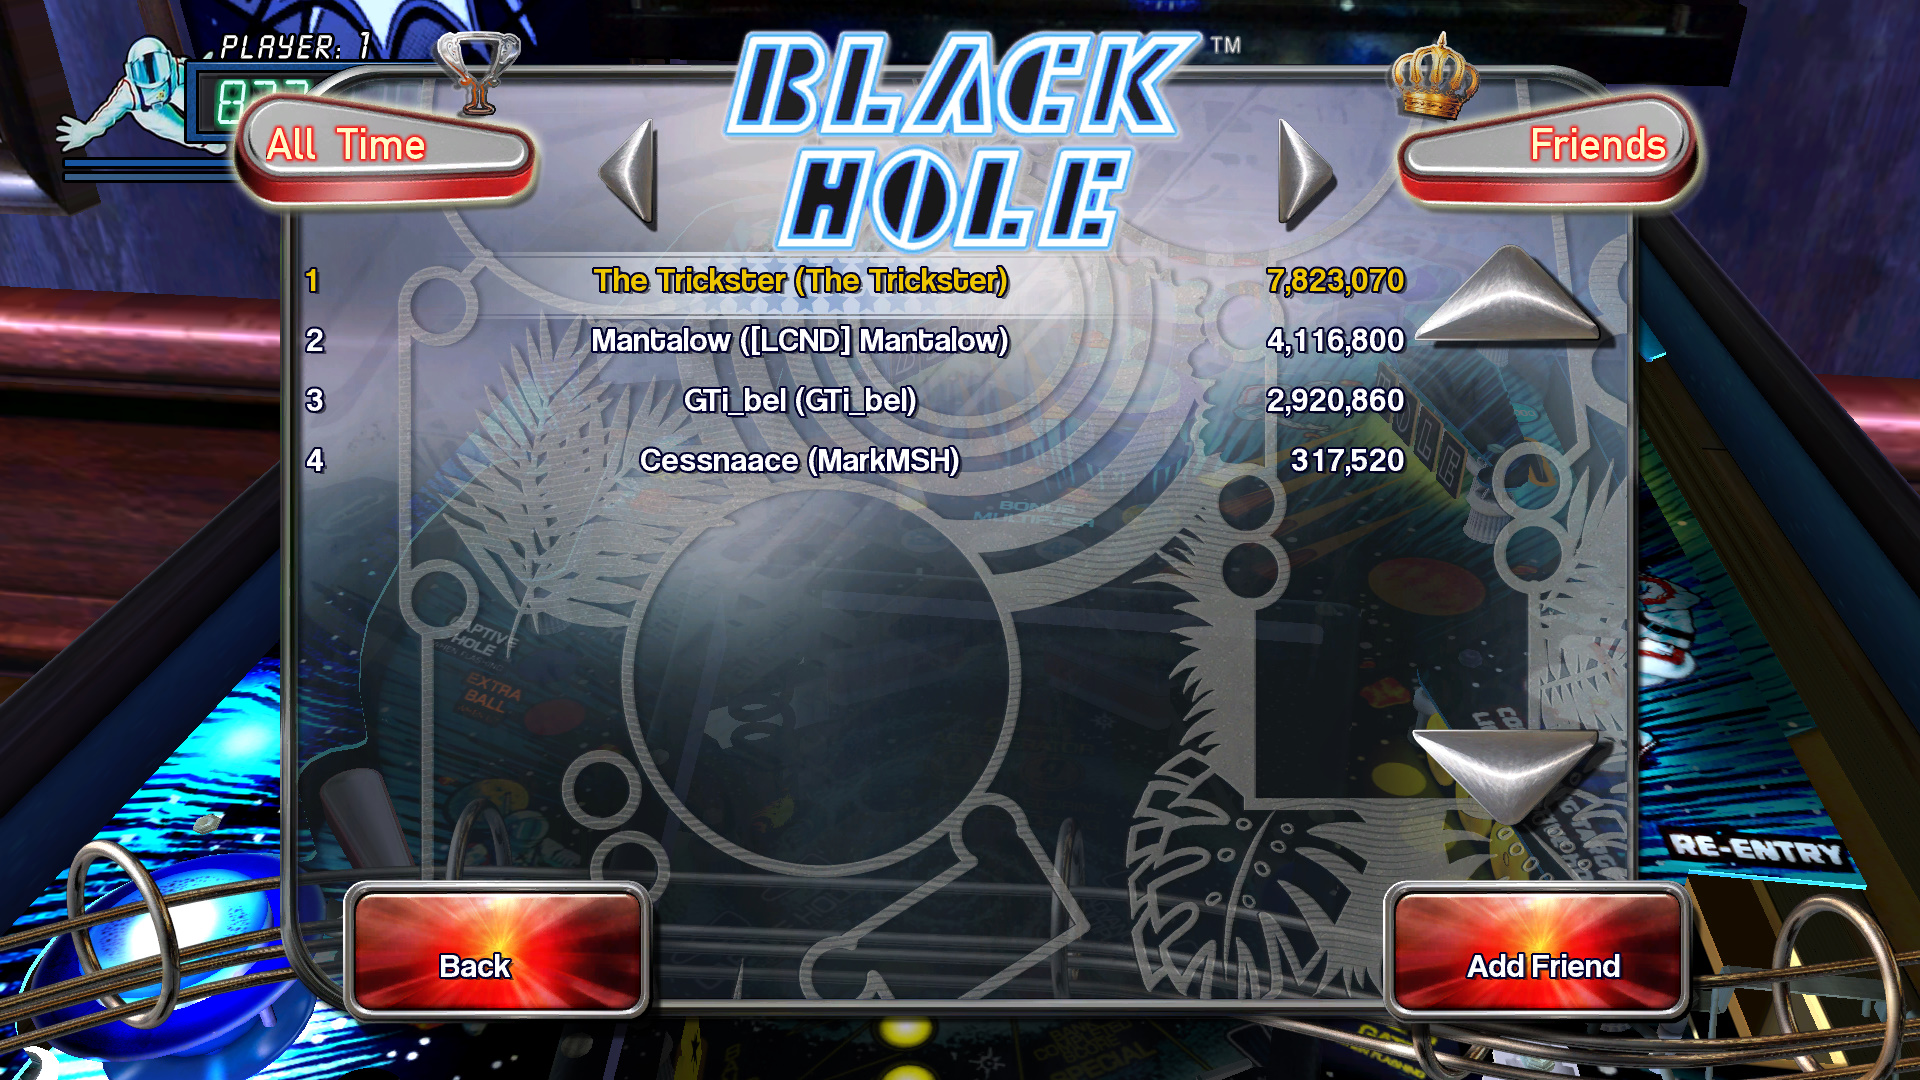 TheTrickster: Pinball Arcade: Black Hole (PC) 7,823,070 points on 2015-09-12 03:47:21